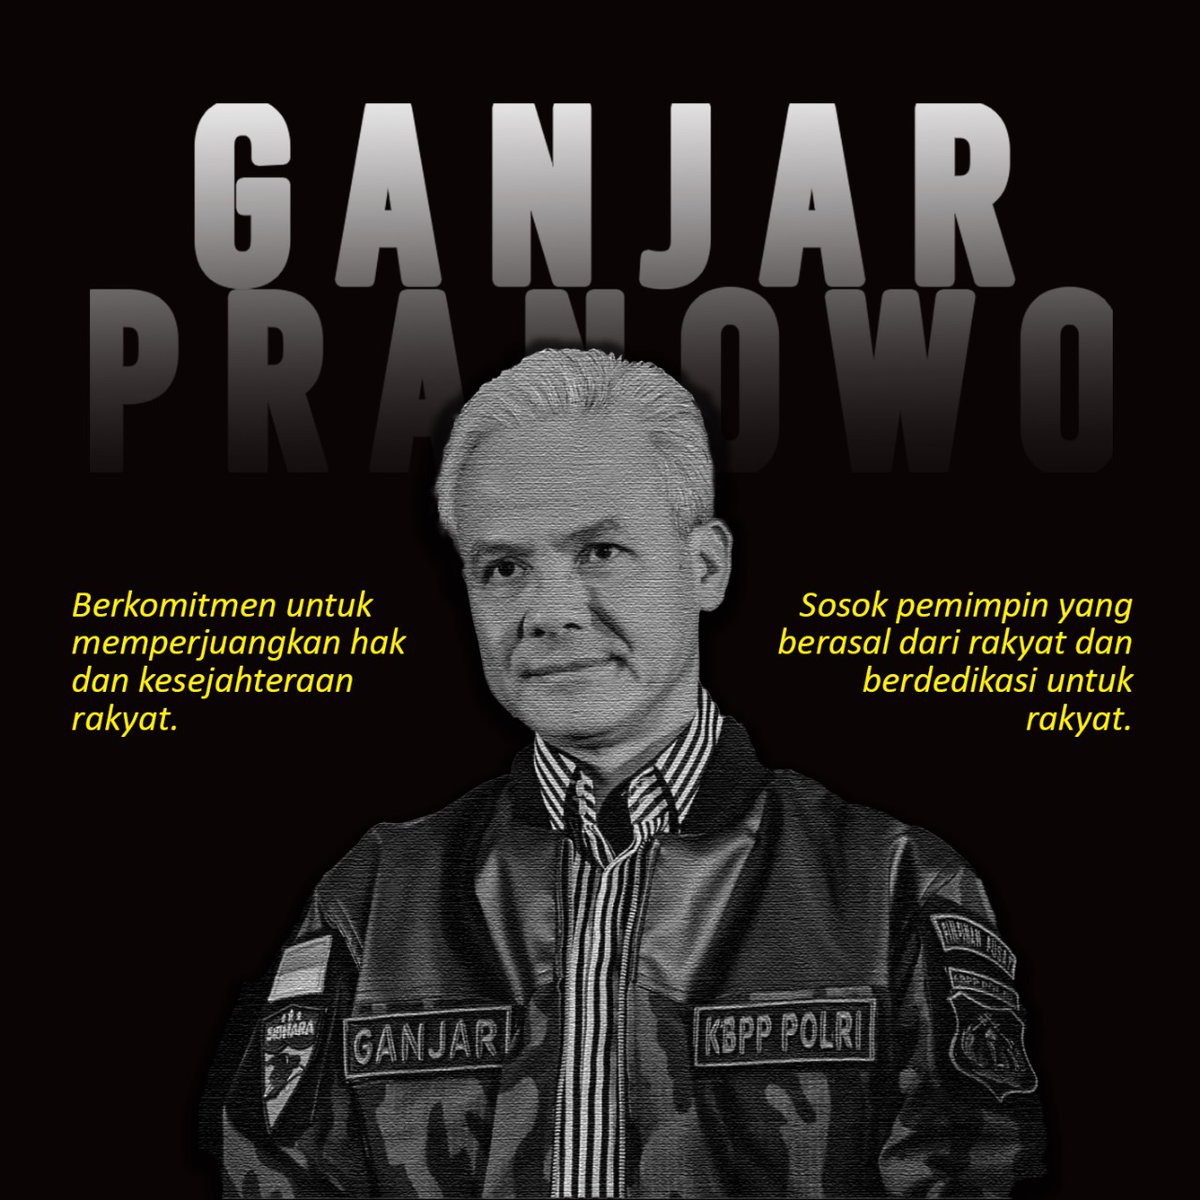 Semangat Pak Ganjar Pranowo dalam memperjuangkan kepentingan rakyat adalah sumber inspirasi bagi kita semua. Ganjar Pranowo, hanya yang terbaik untuk rakyat @ardiyani_ytaa 
#KitaAdalahTiga
#BanggaBersamaGPMMD